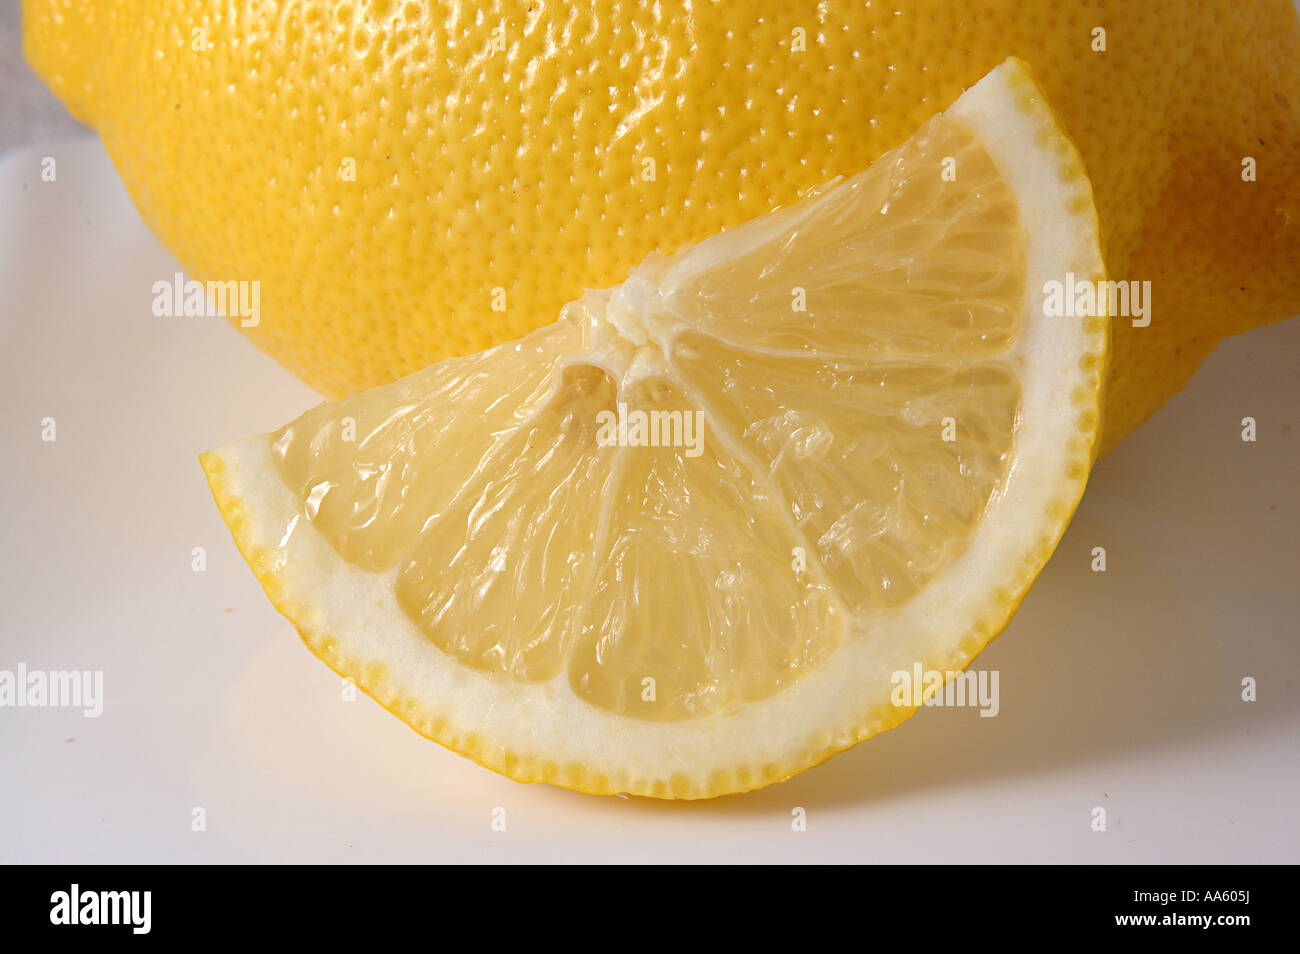 ANG103826 Fruit One lemon and slice on the plate Stock Photo